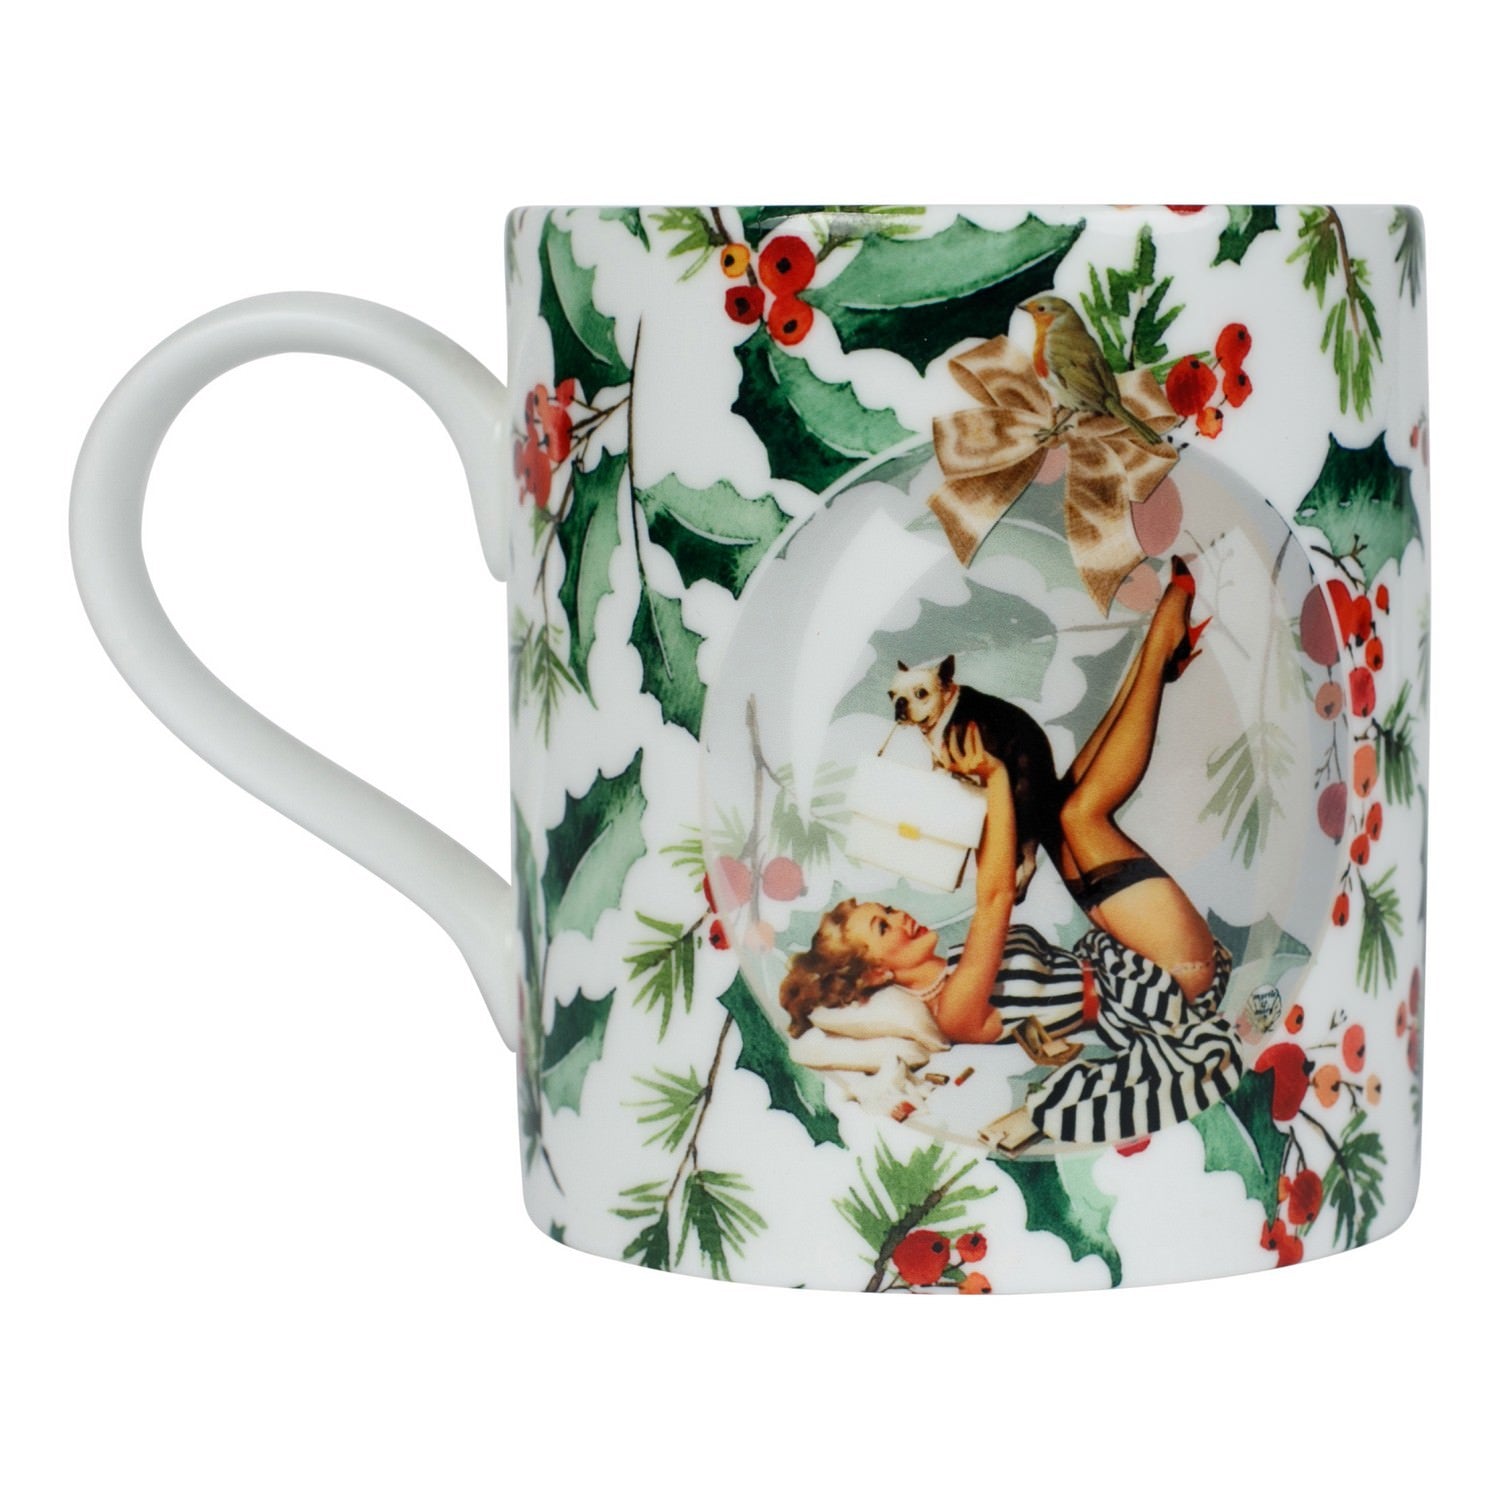 Luxury bone china mug in a maximalist festive design called - Festive Holly